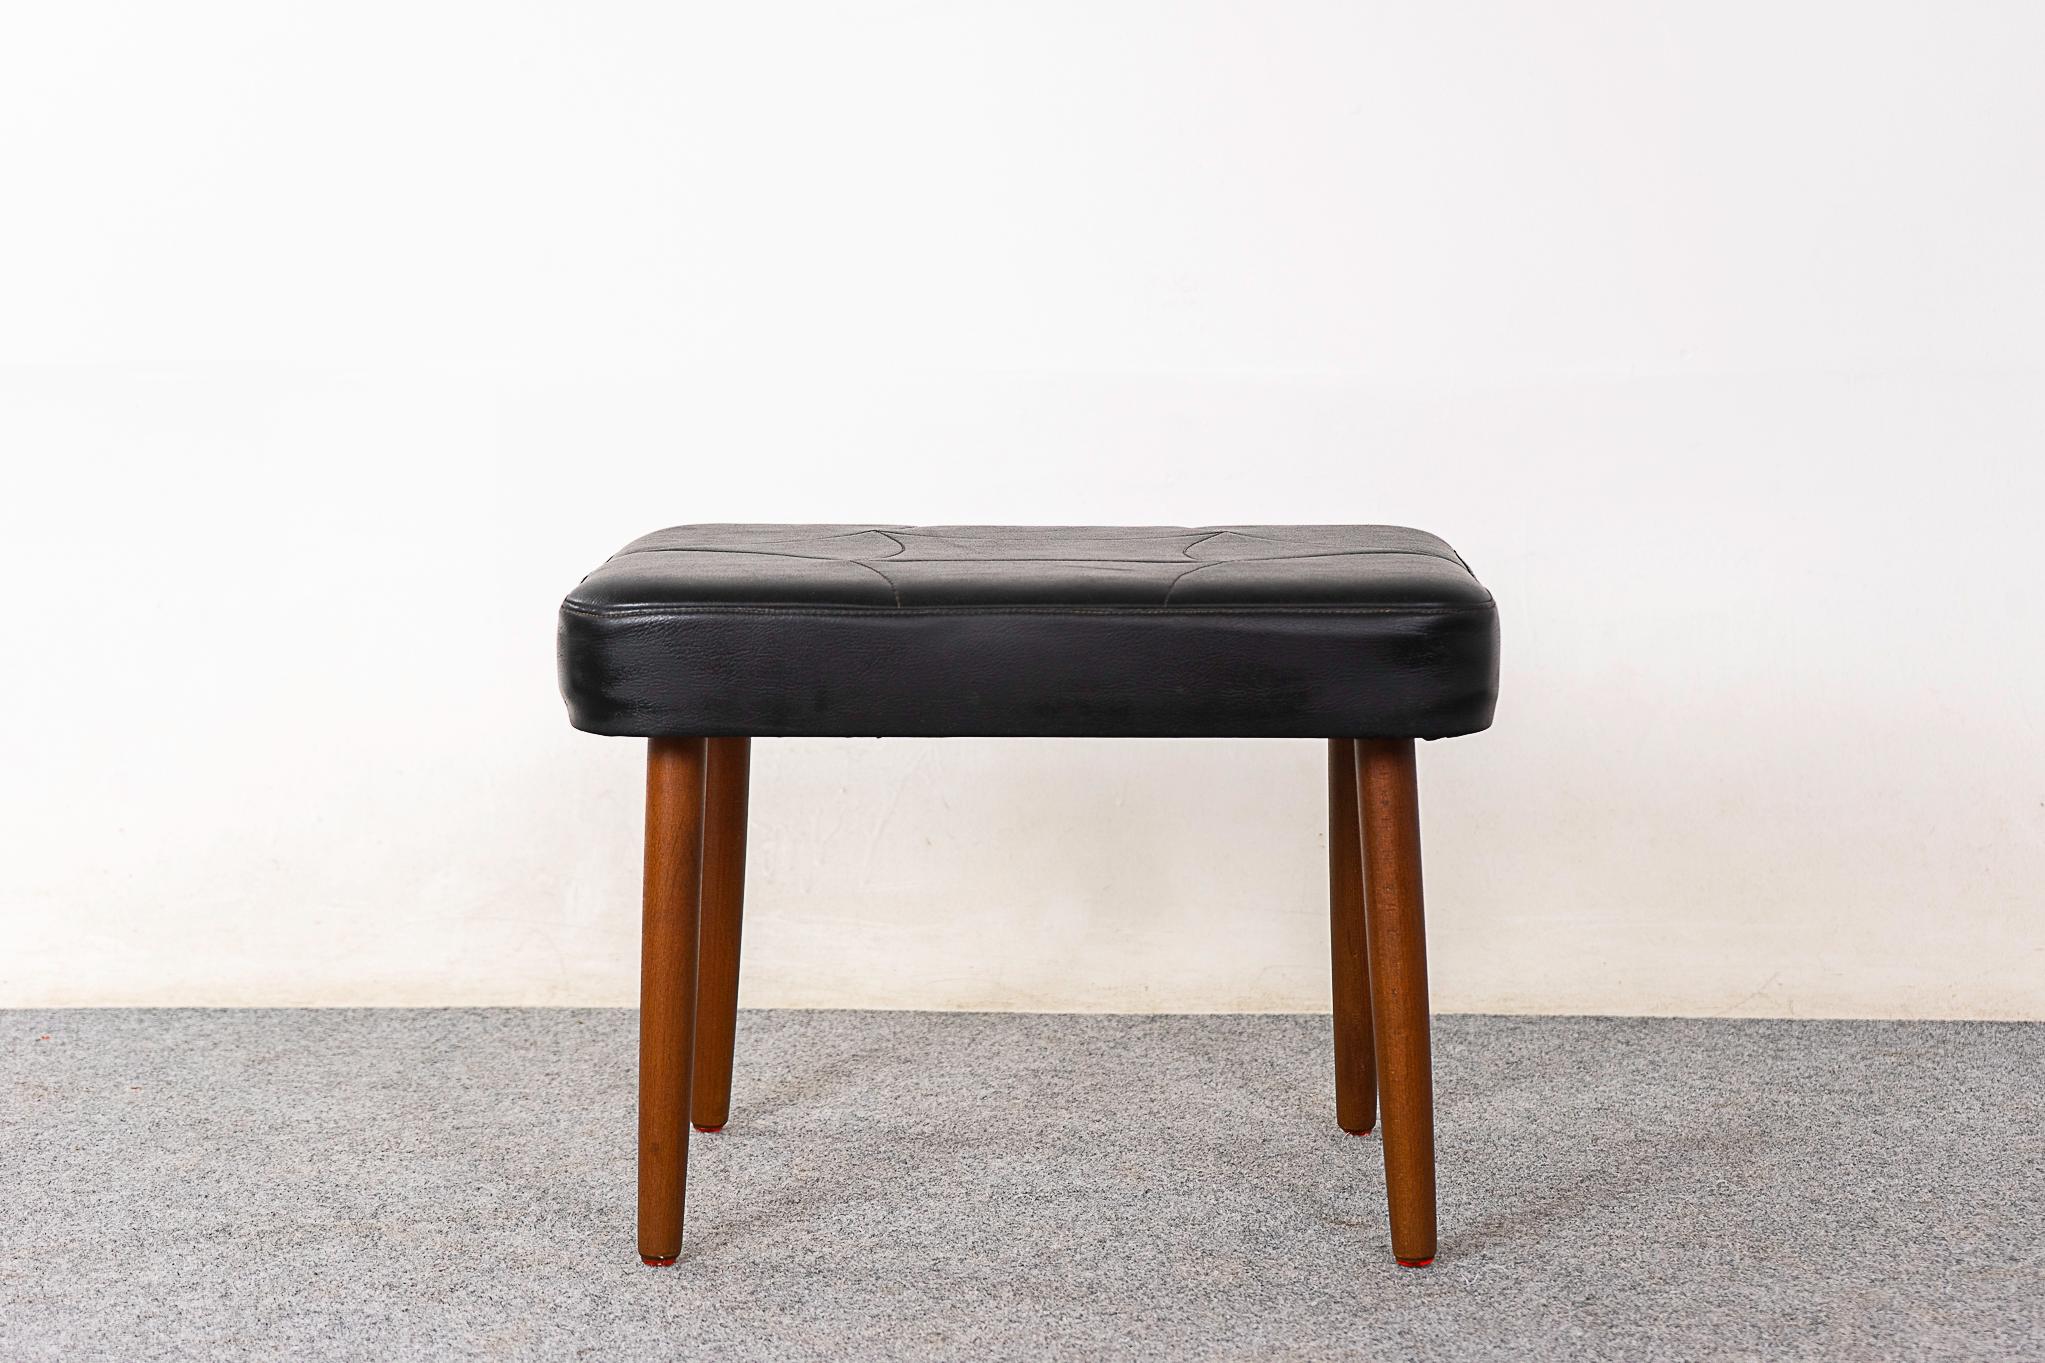 Teak Danish footstool, circa 1960's. Tapering, sleek removable legs and original vinyl upholstery. 


